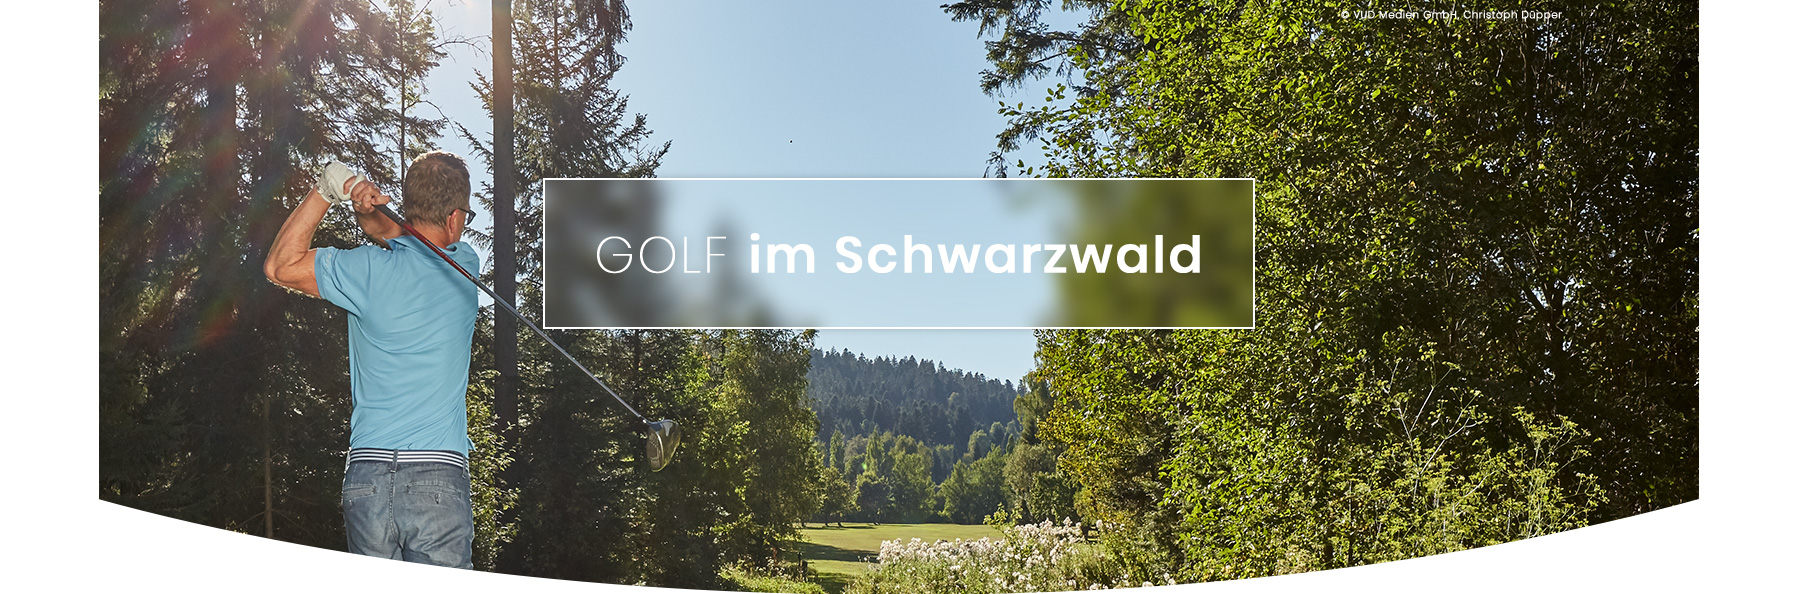 vud-golf-schwarzwald_header_06-2019